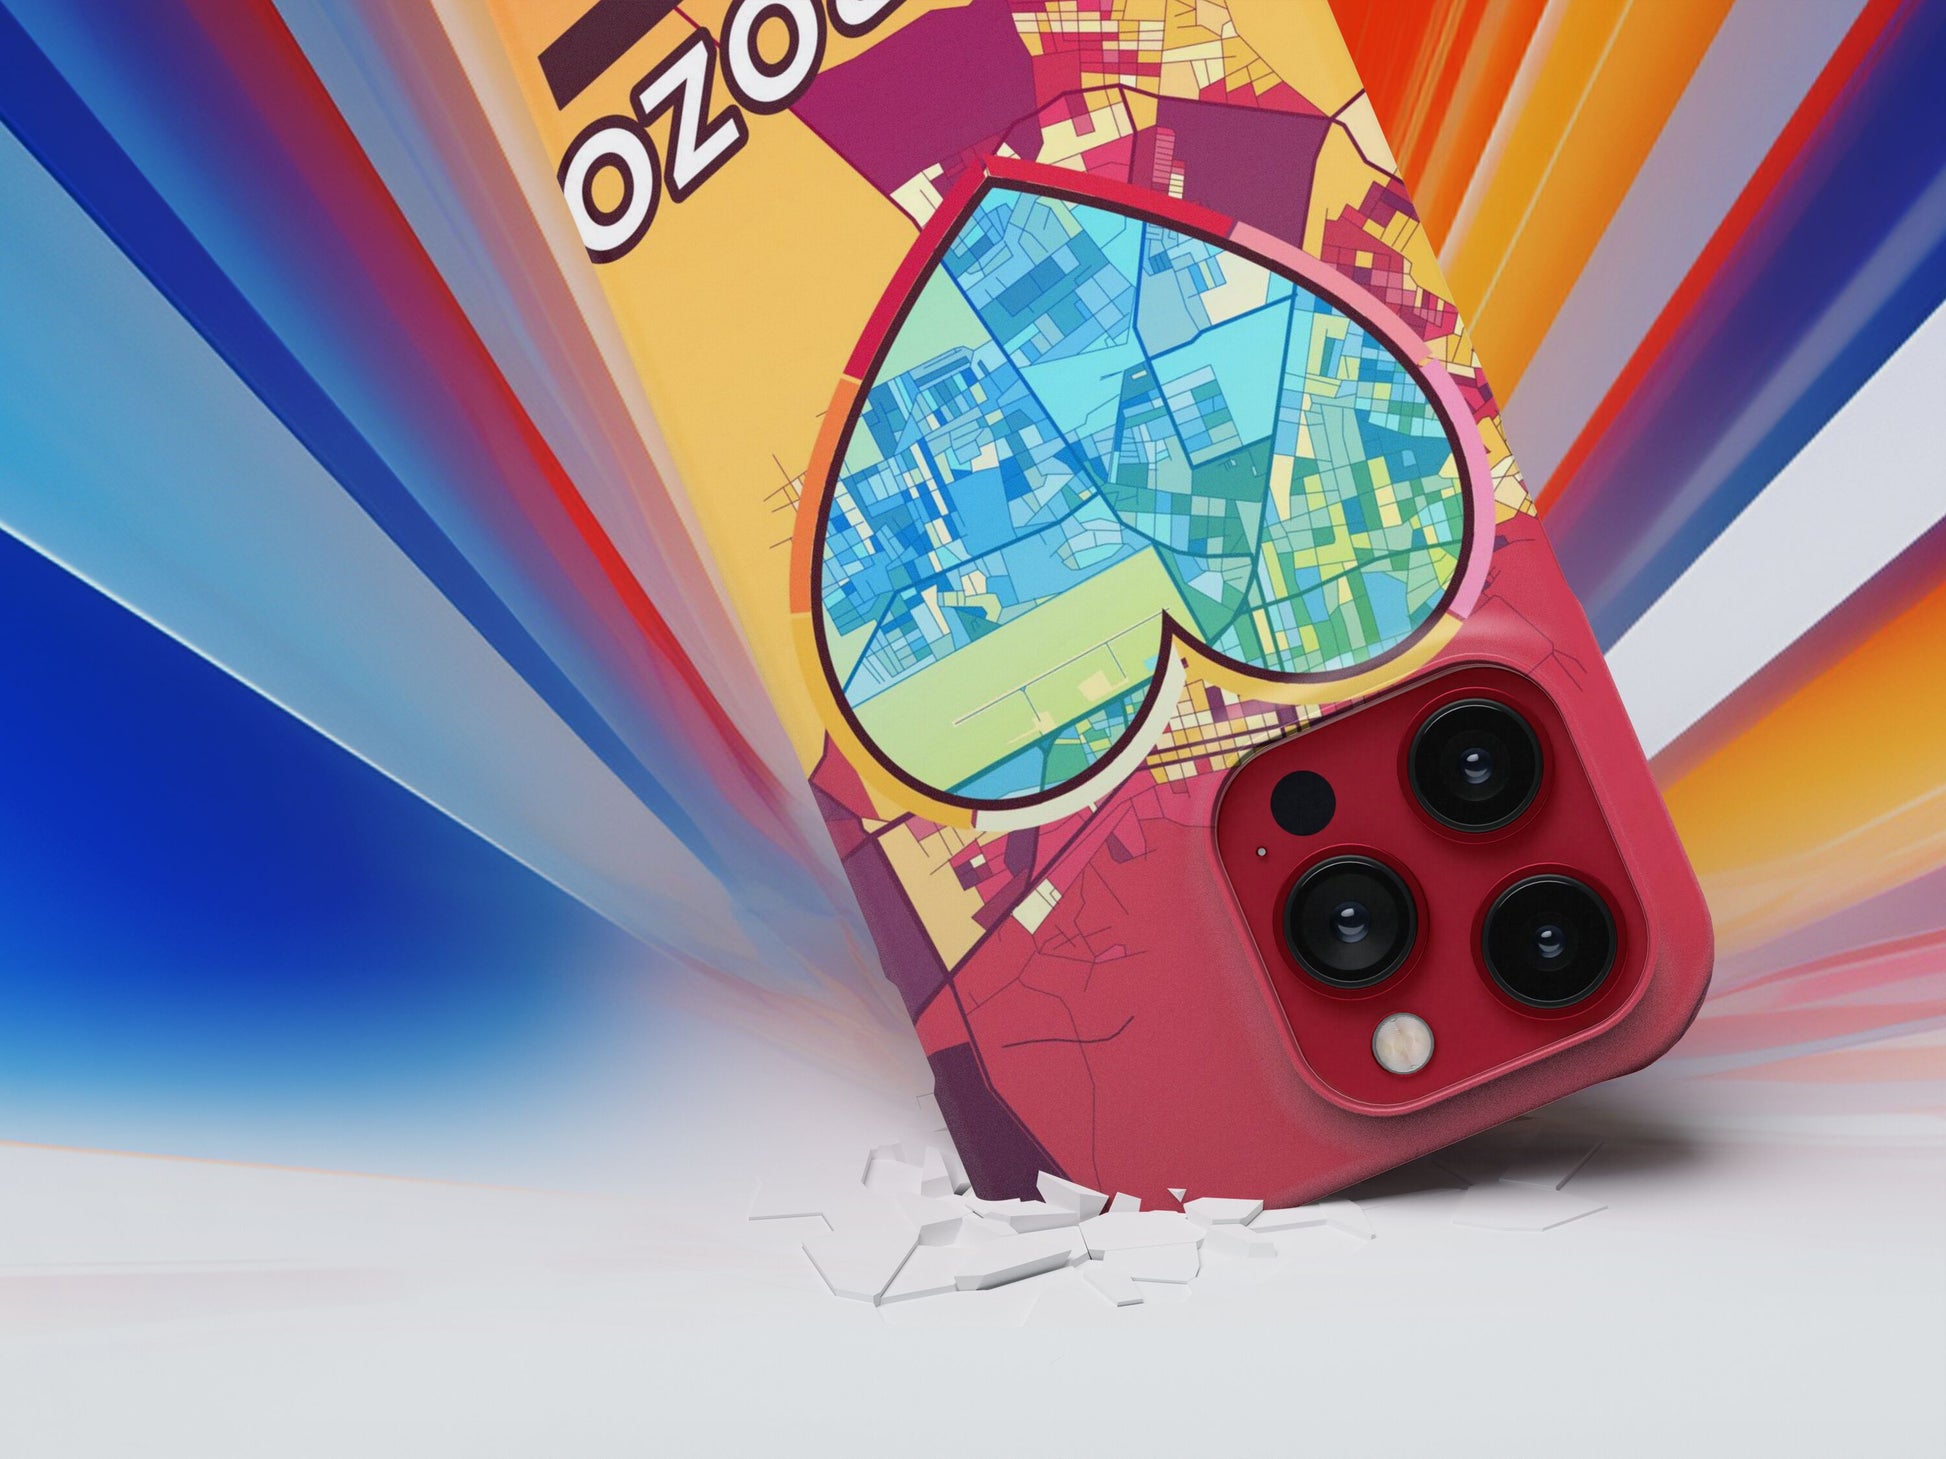 Calabozo Venezuela slim phone case with colorful icon. Birthday, wedding or housewarming gift. Couple match cases.